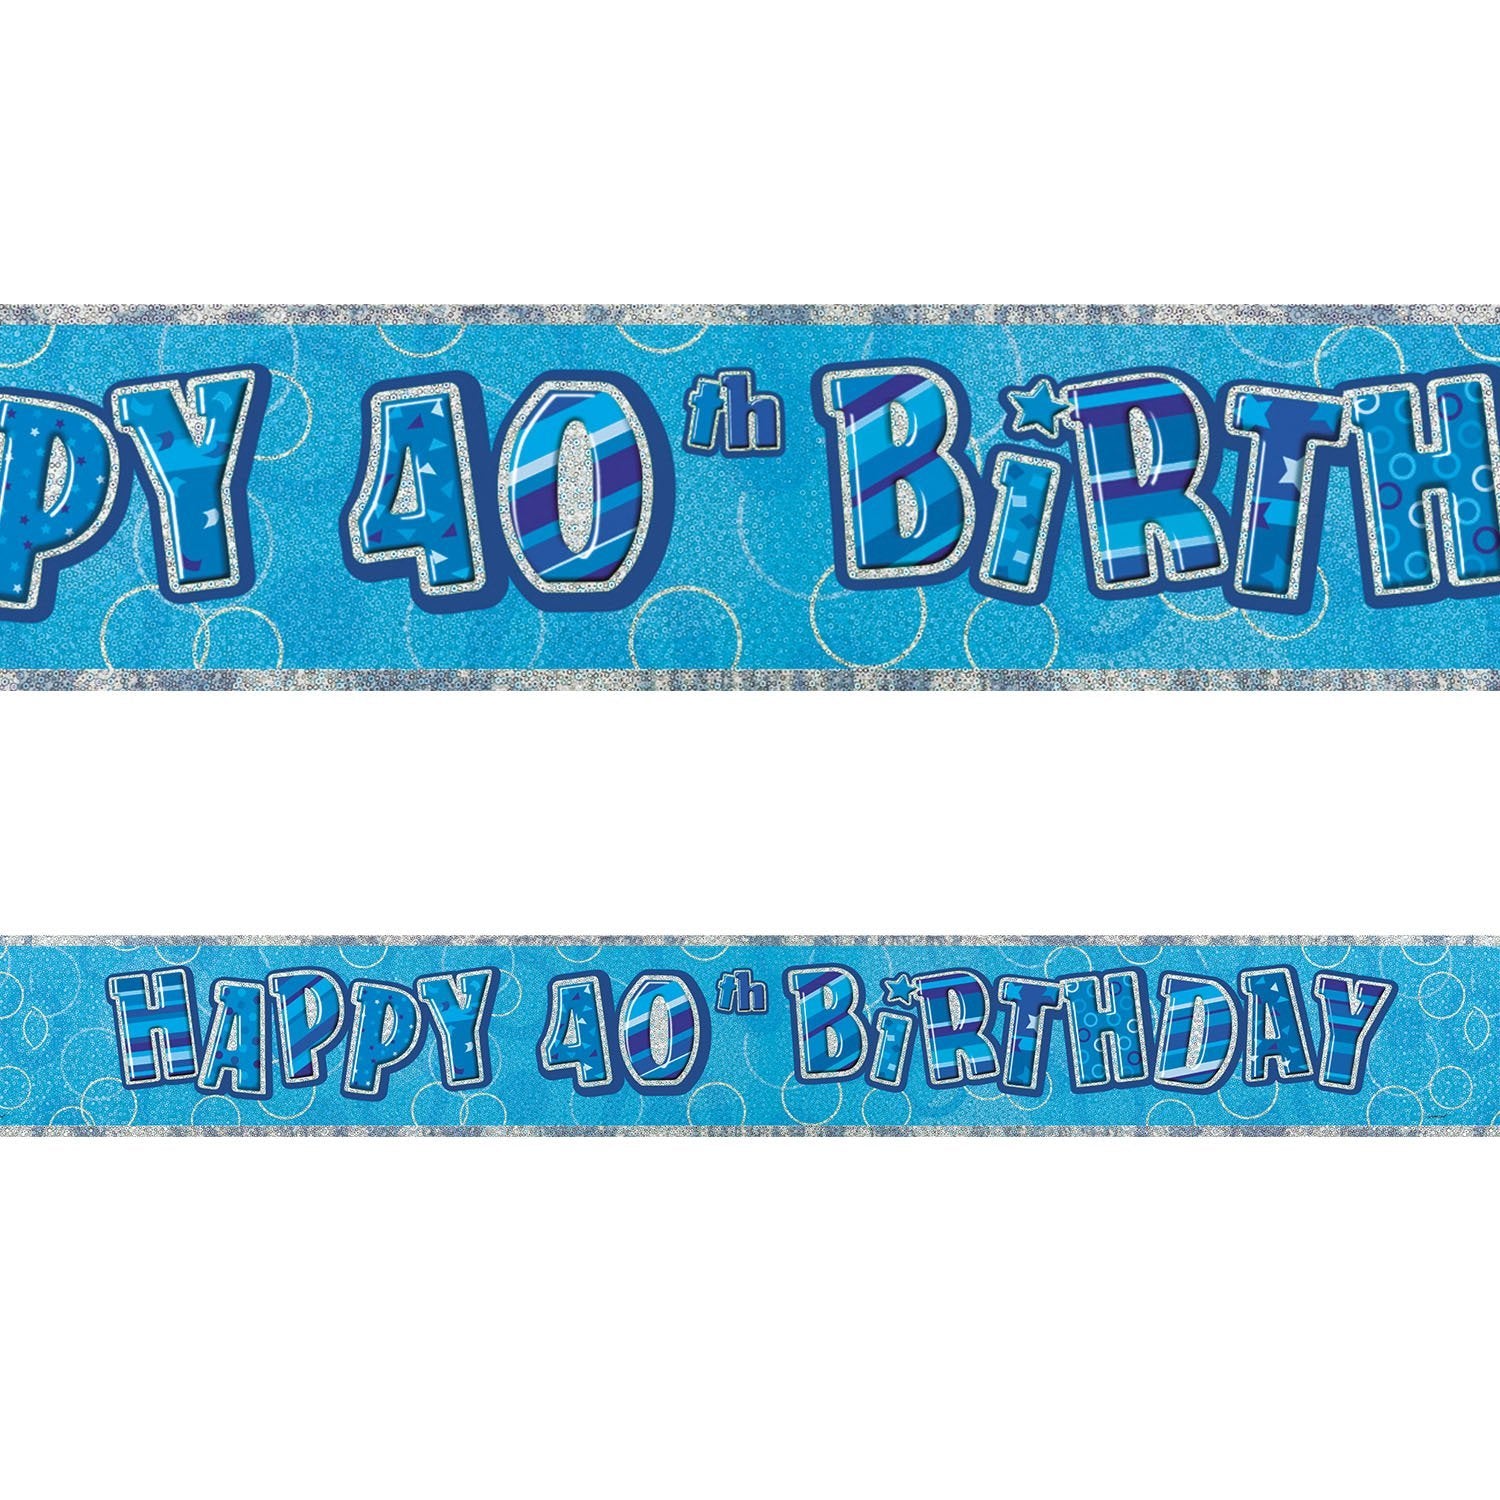 Birthday Glitz Strip Banner - Blue 40th Birthday